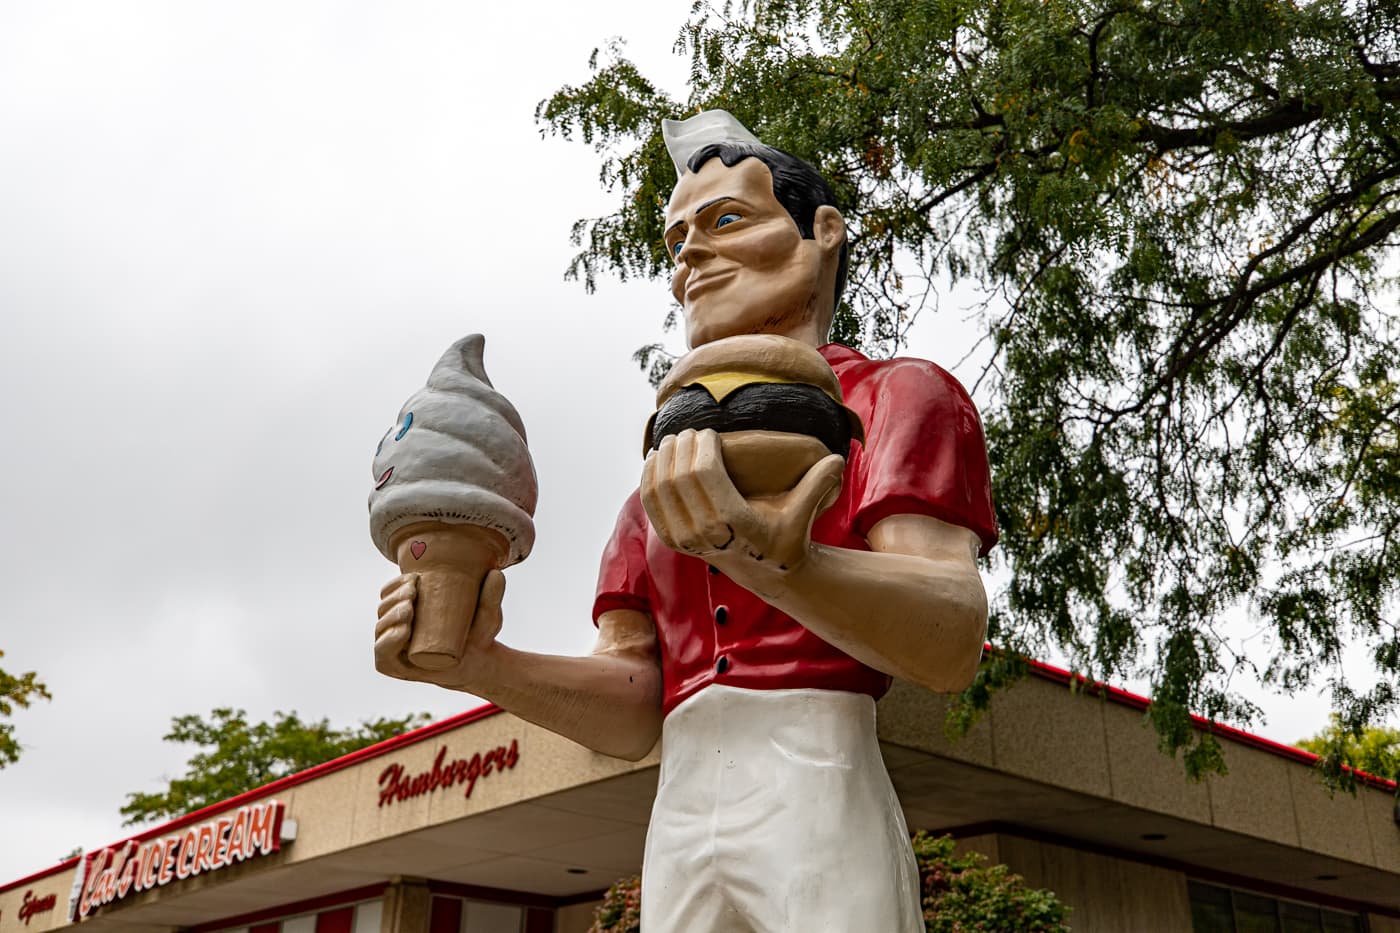 Carl's Ice Cream Muffler Man in Normal, Illinois Route 66 Roadside Attraction